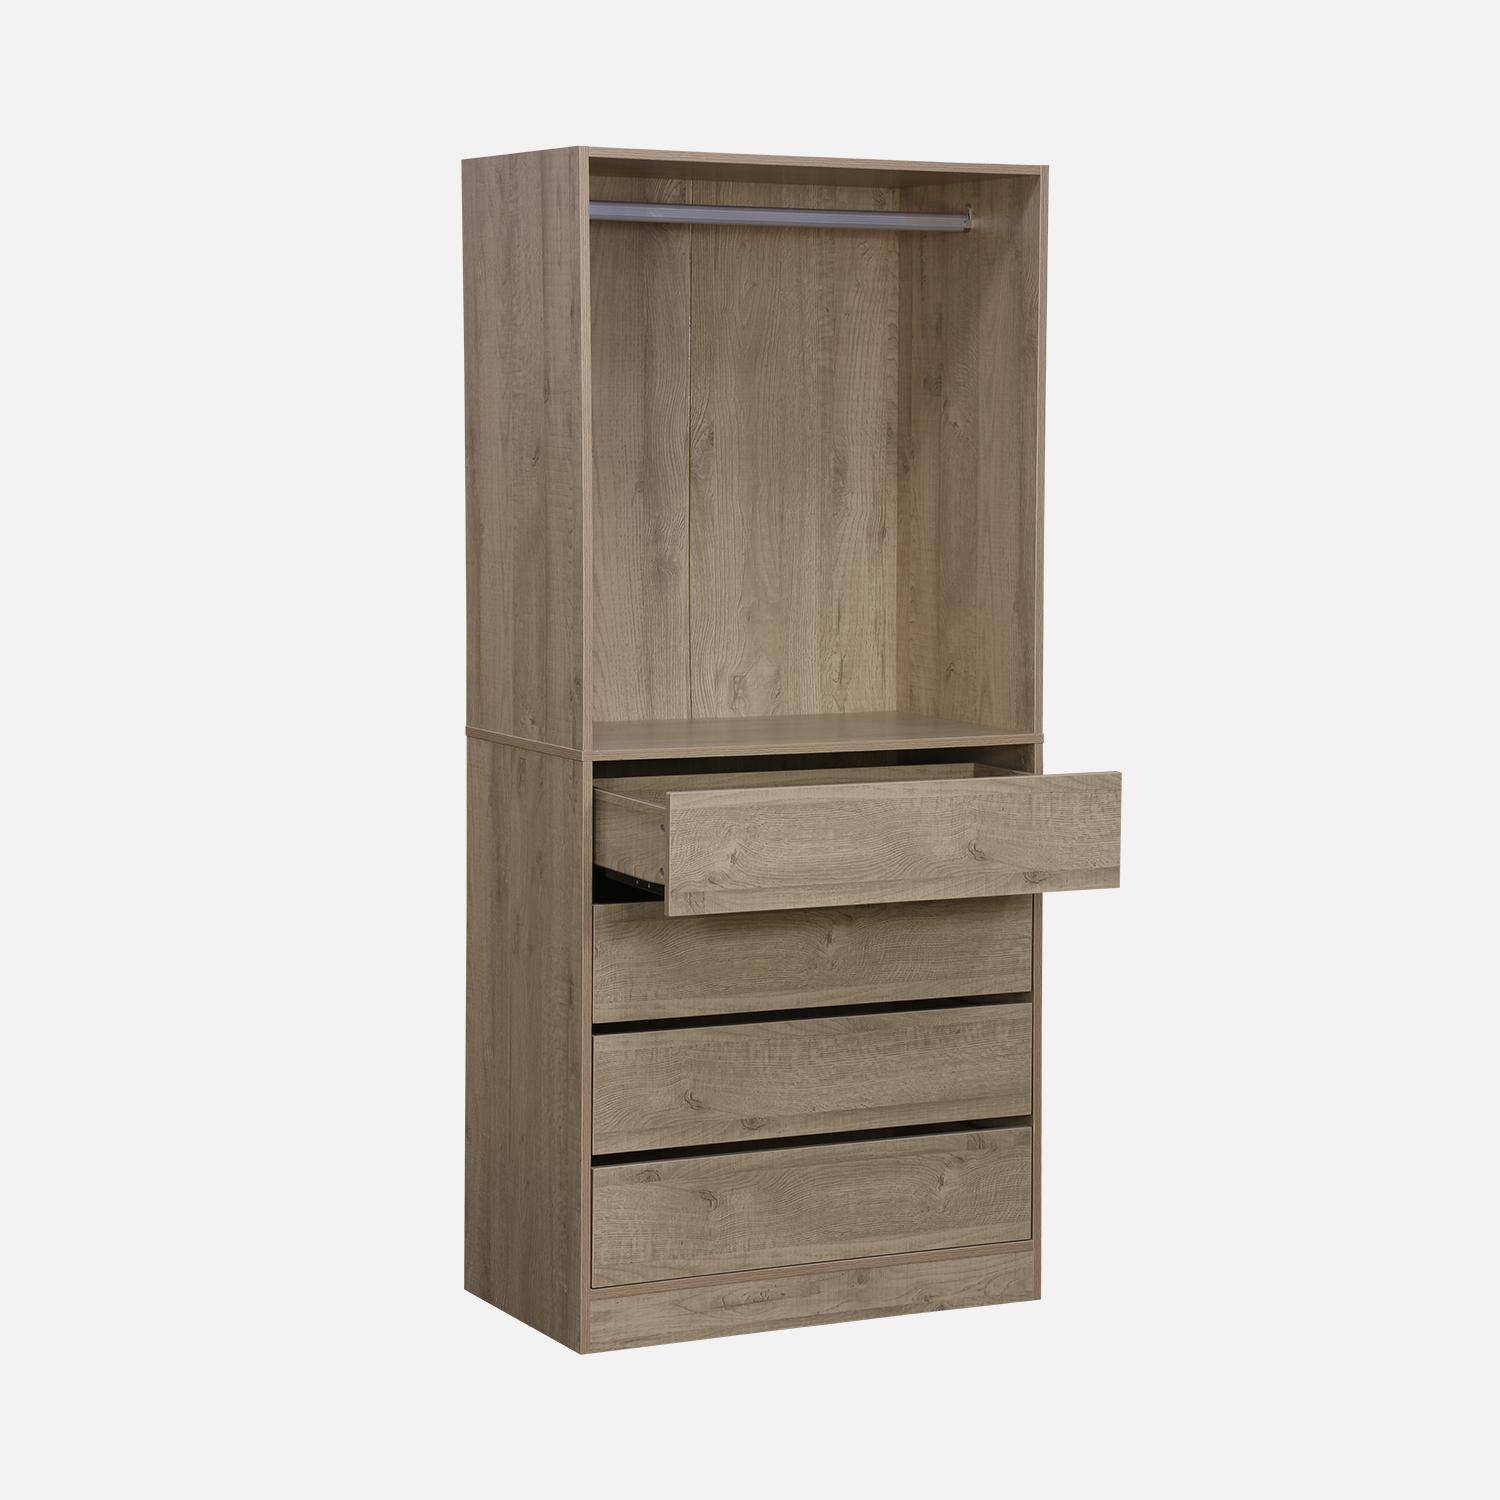 Modular open wardrobe drawer and rail unit, 60x45x180cm, Modulo, 4 drawers, 1 clothes rail, Natural Photo7